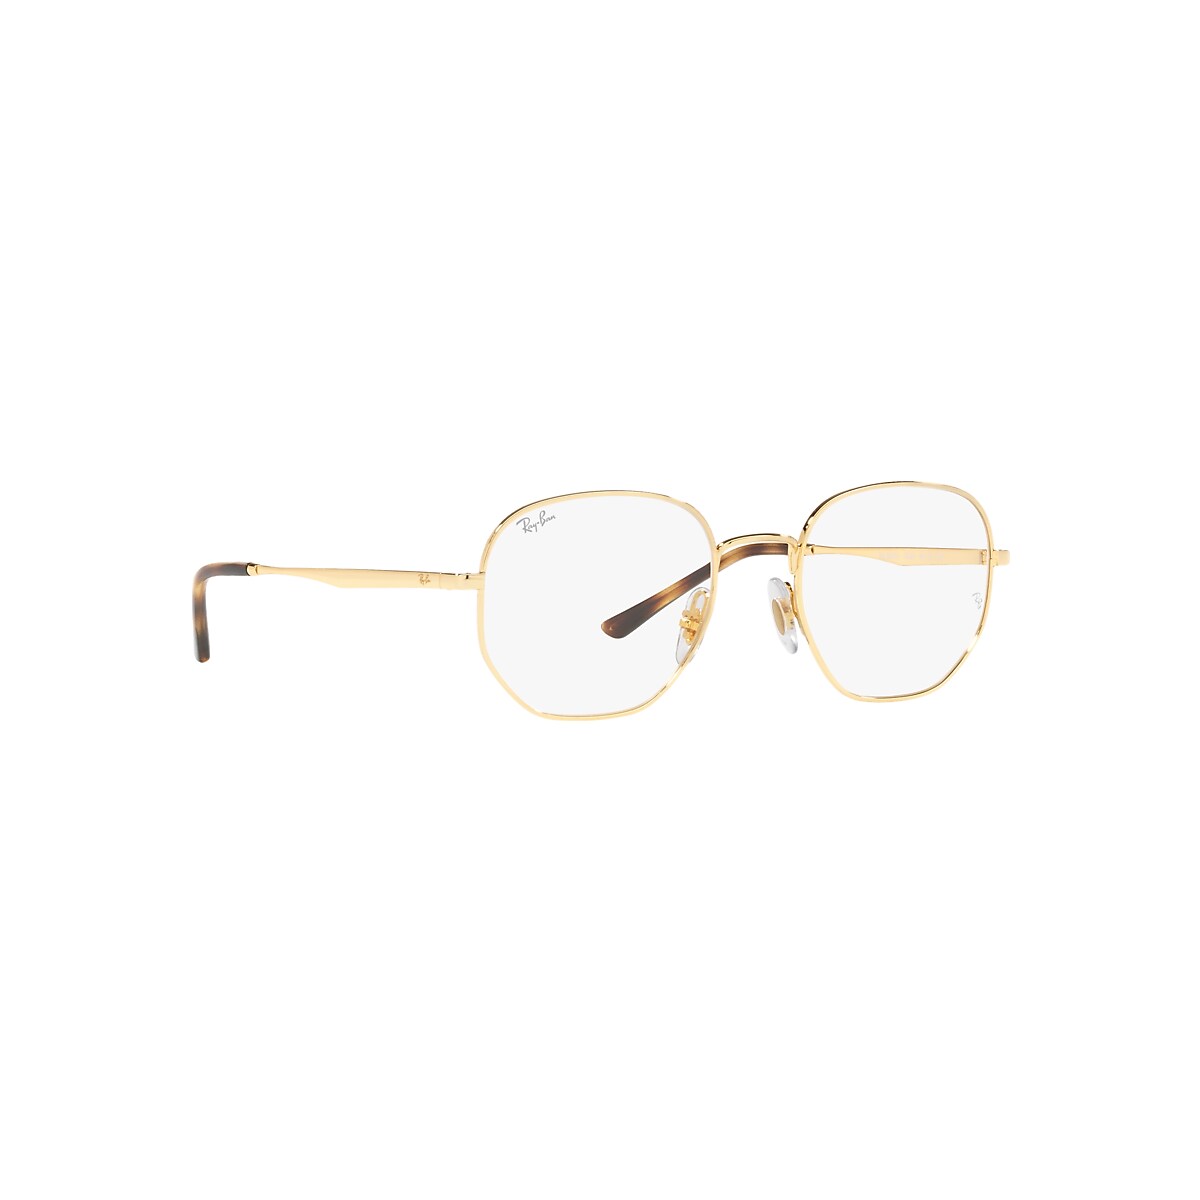 Rb3682 Optics Eyeglasses with Gold Frame | Ray-Ban®